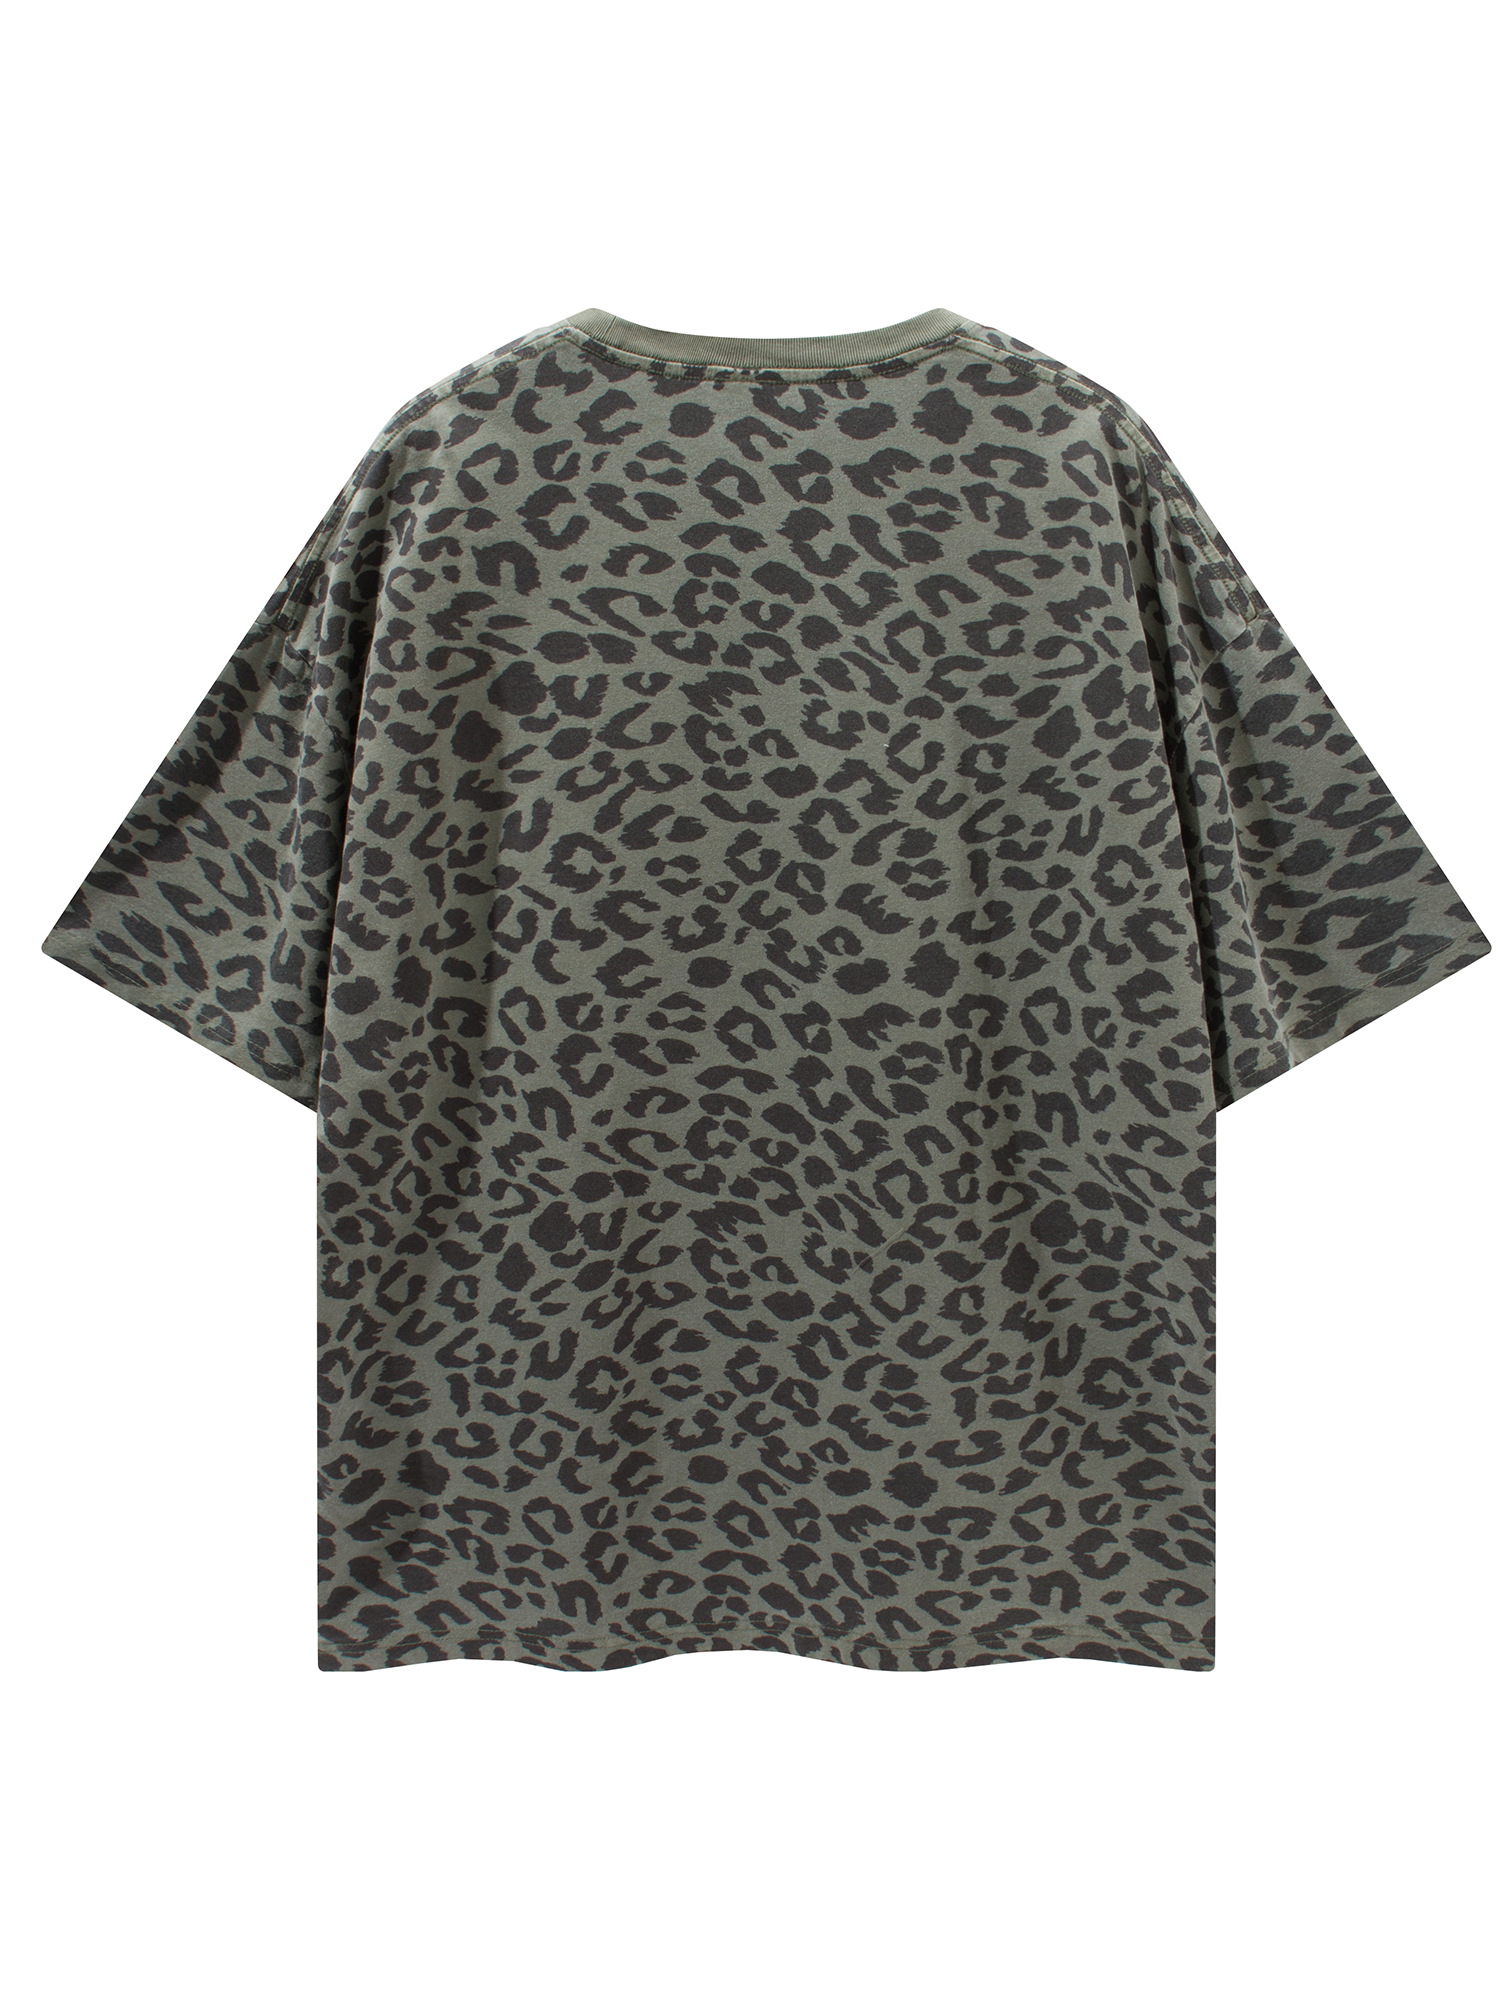 JUSTNOTAG Green leopard Print 100% Cotton Short Sleeve Tee